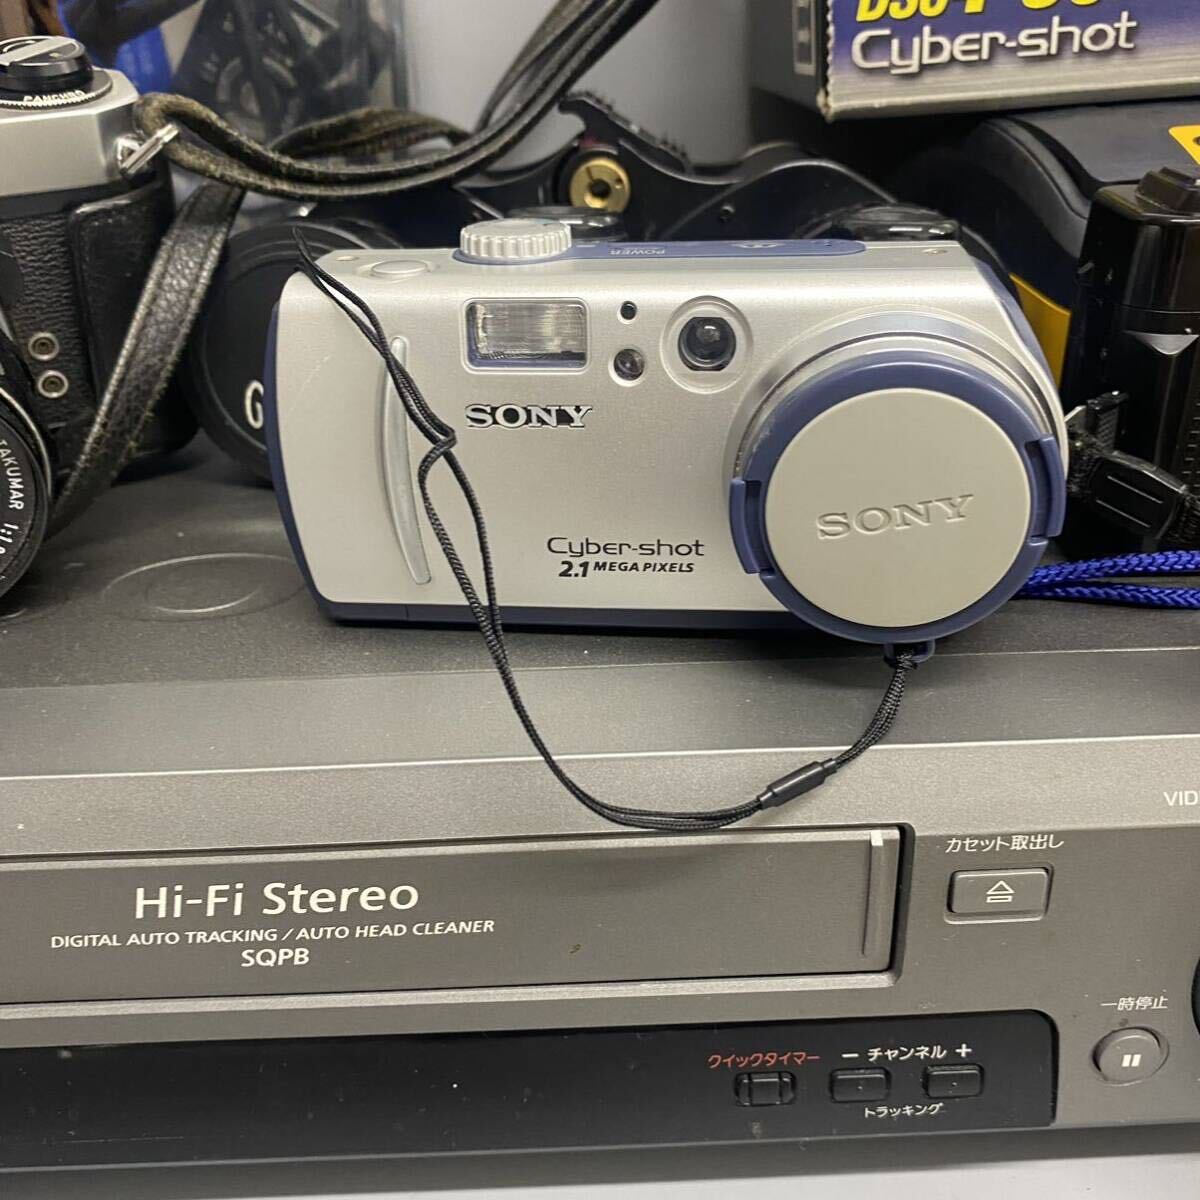 1 jpy . summarize camera binoculars video cassette recorder VHS Sony Olympus Ricoh Pentax yo deer case 8 point present condition goods 